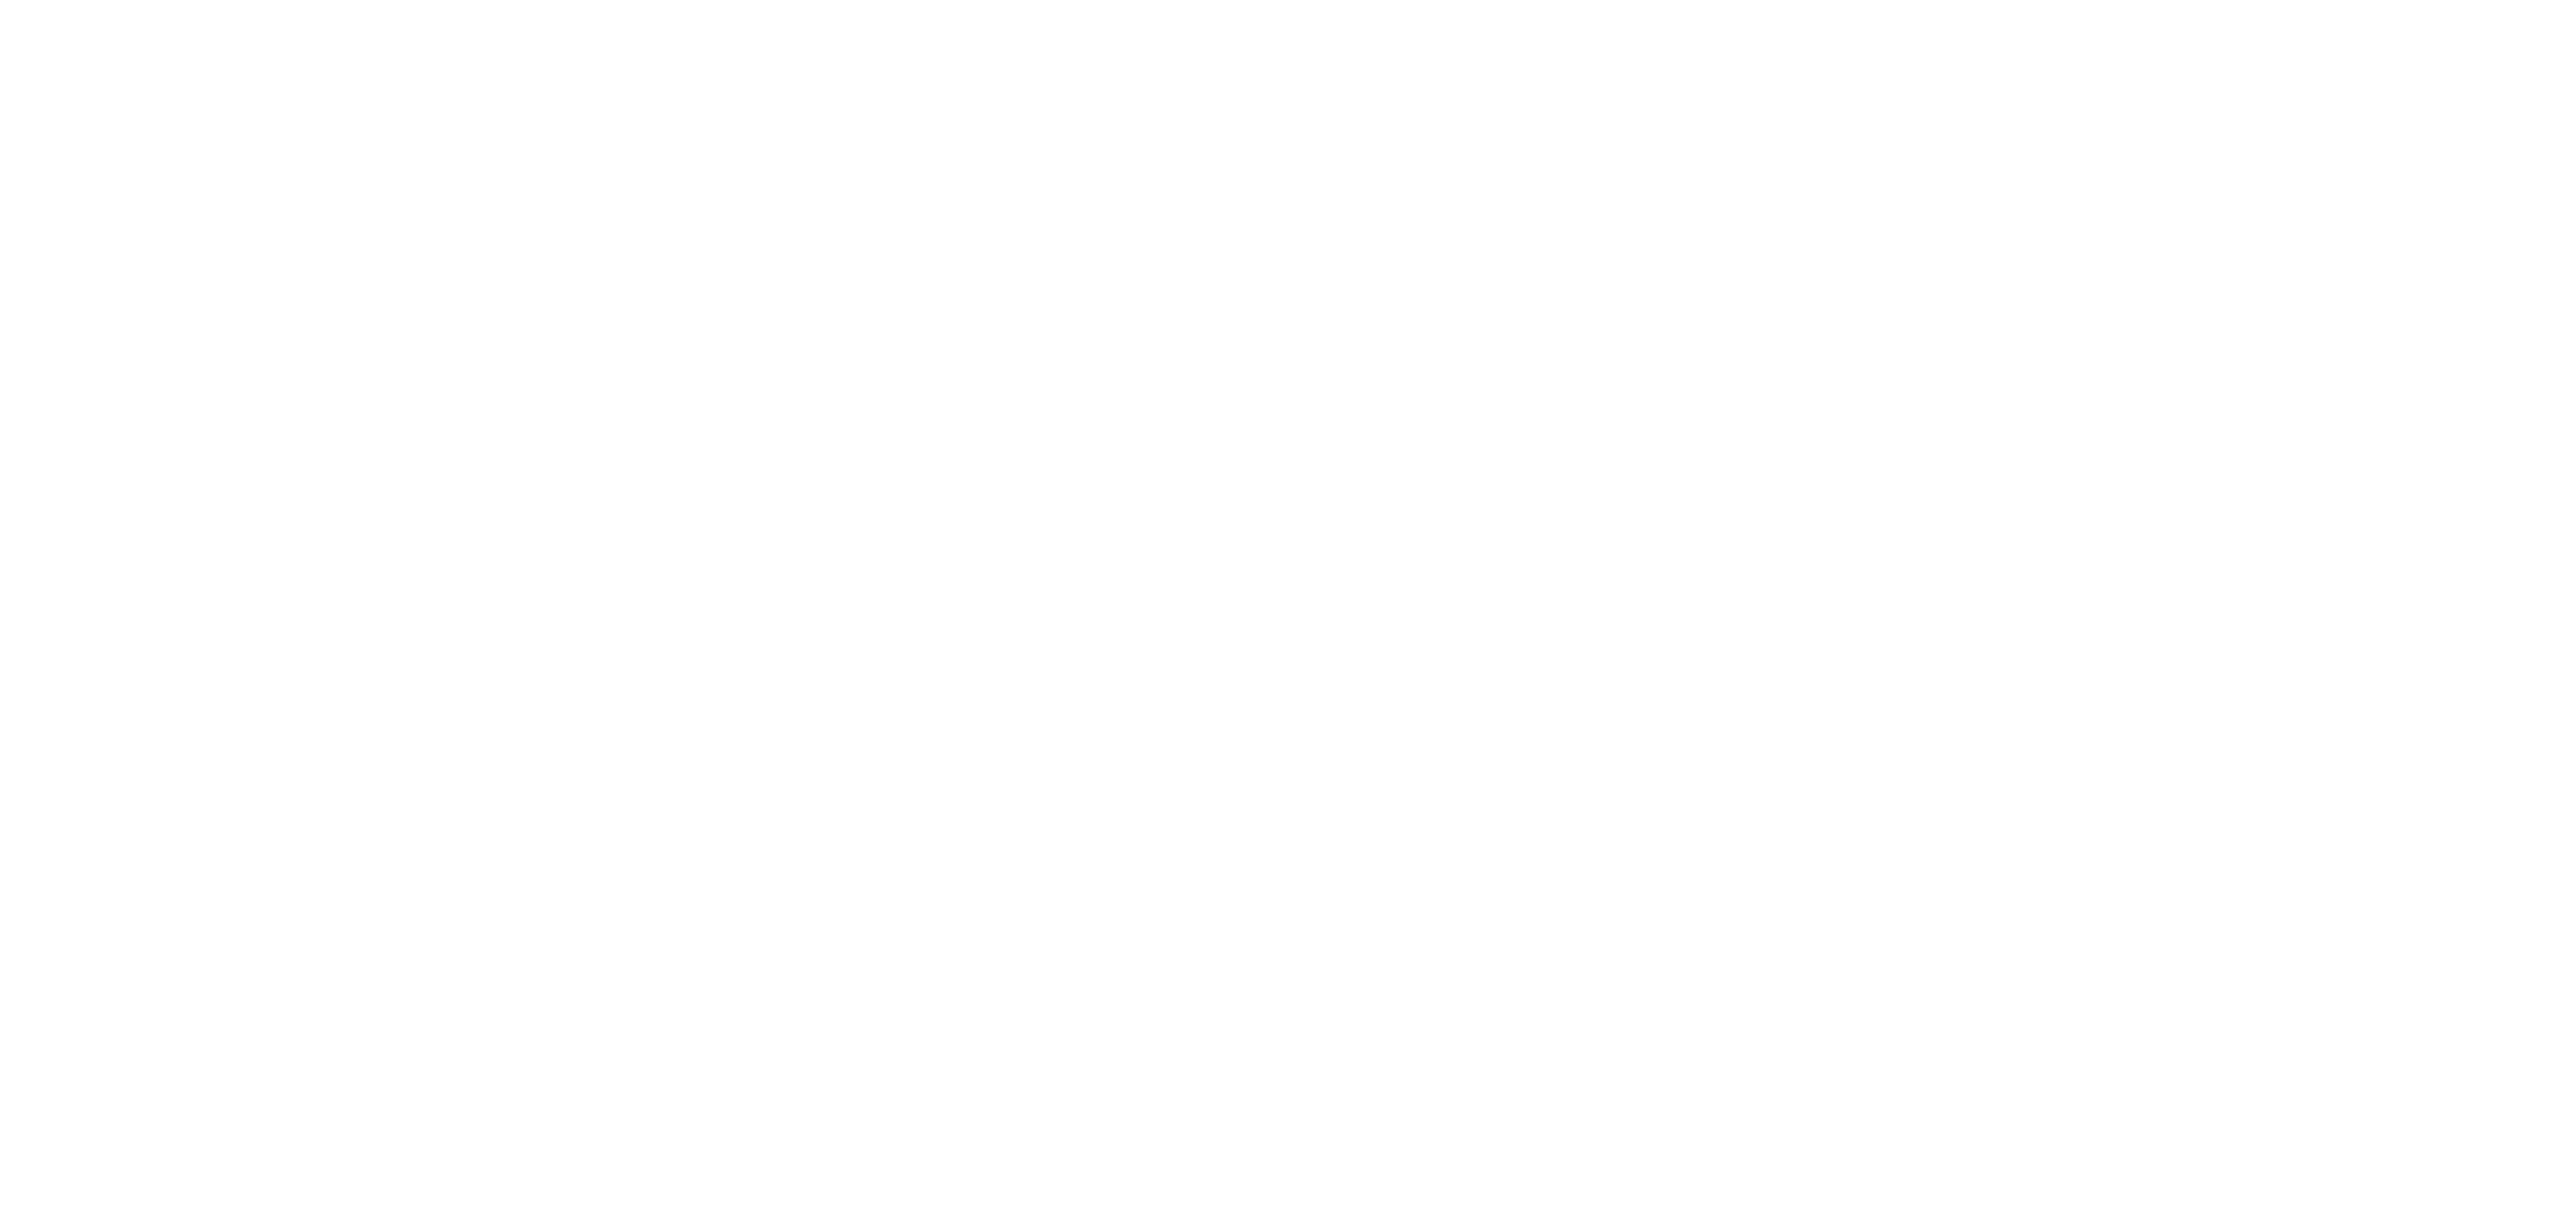 The Eurodar